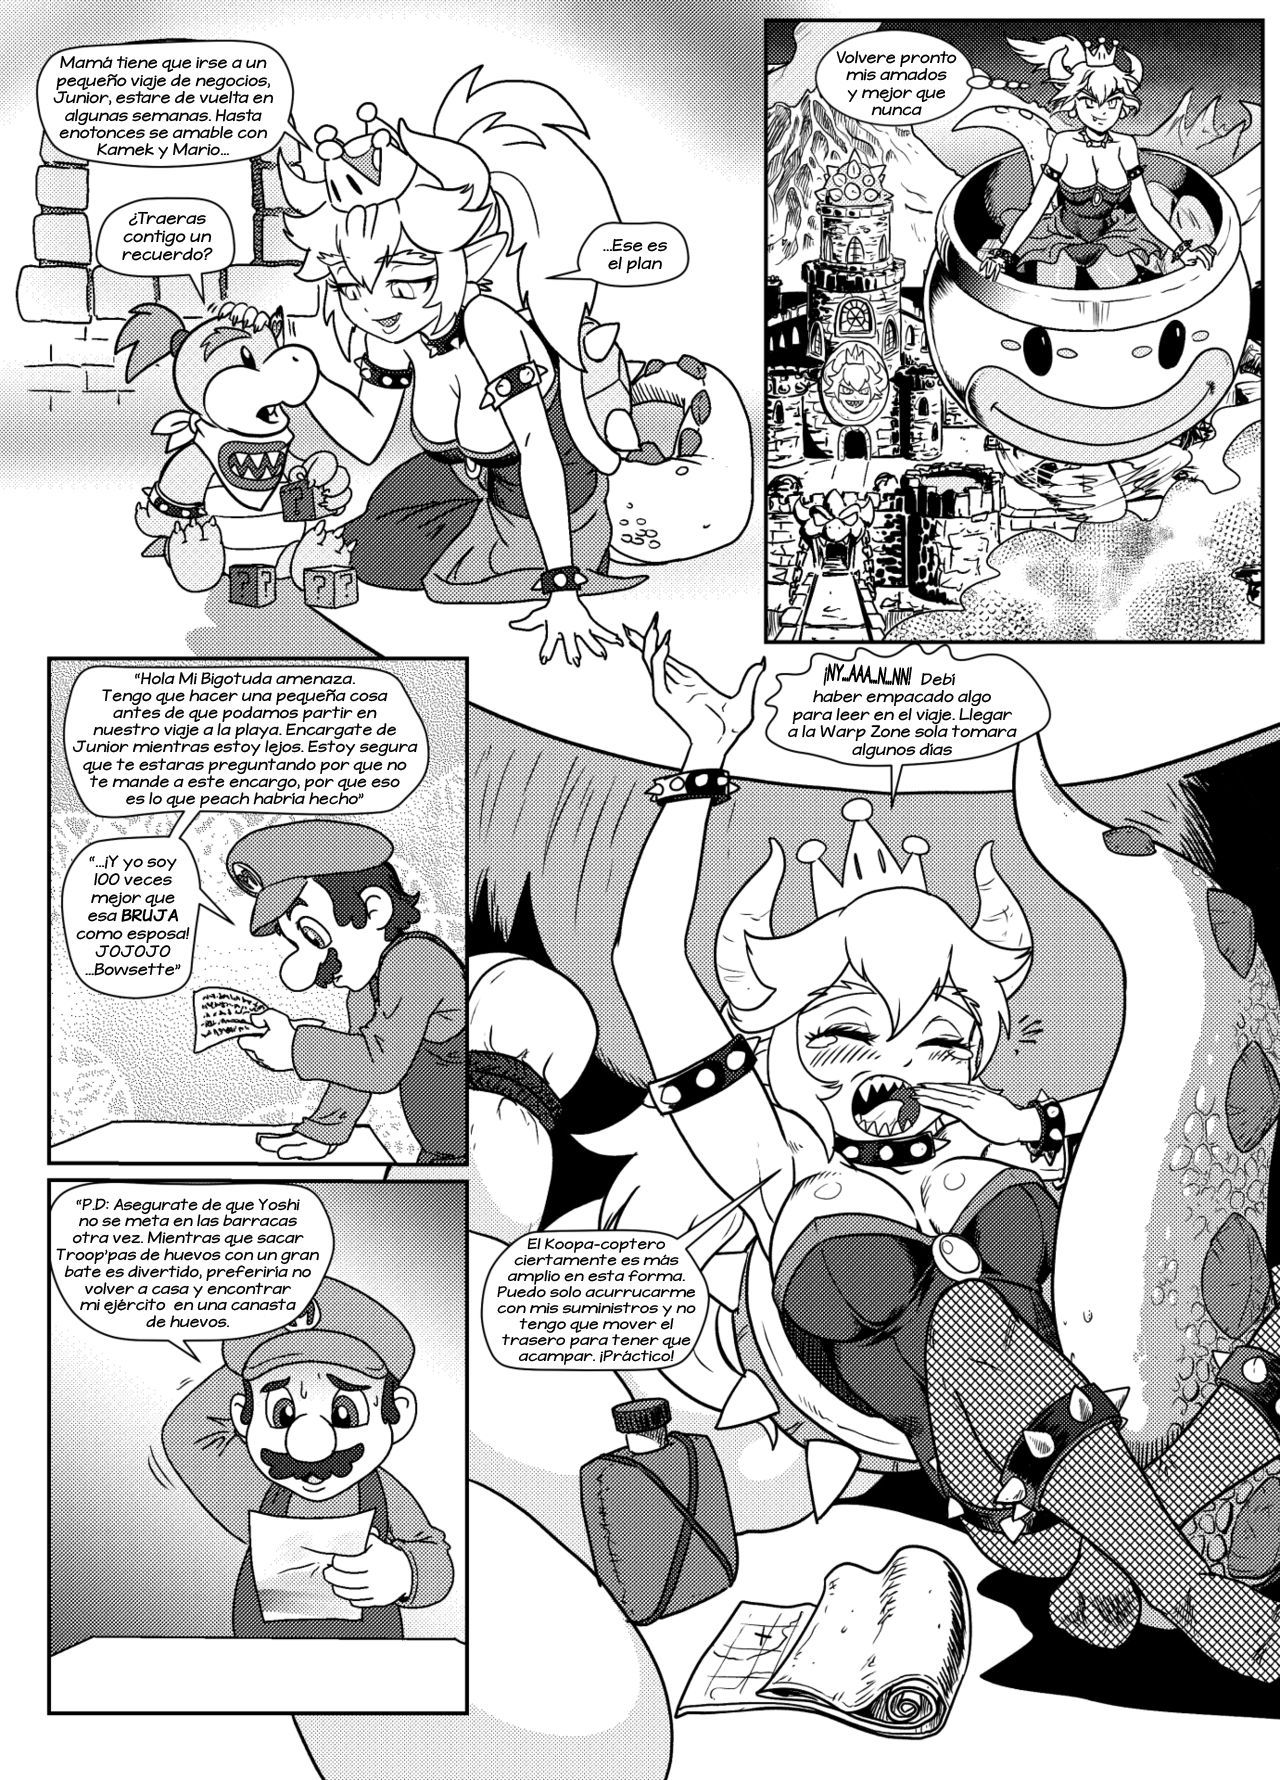 [Pencils] Bowsette comic (Mario Bros.) [Spanish] by Arkoniusx 8